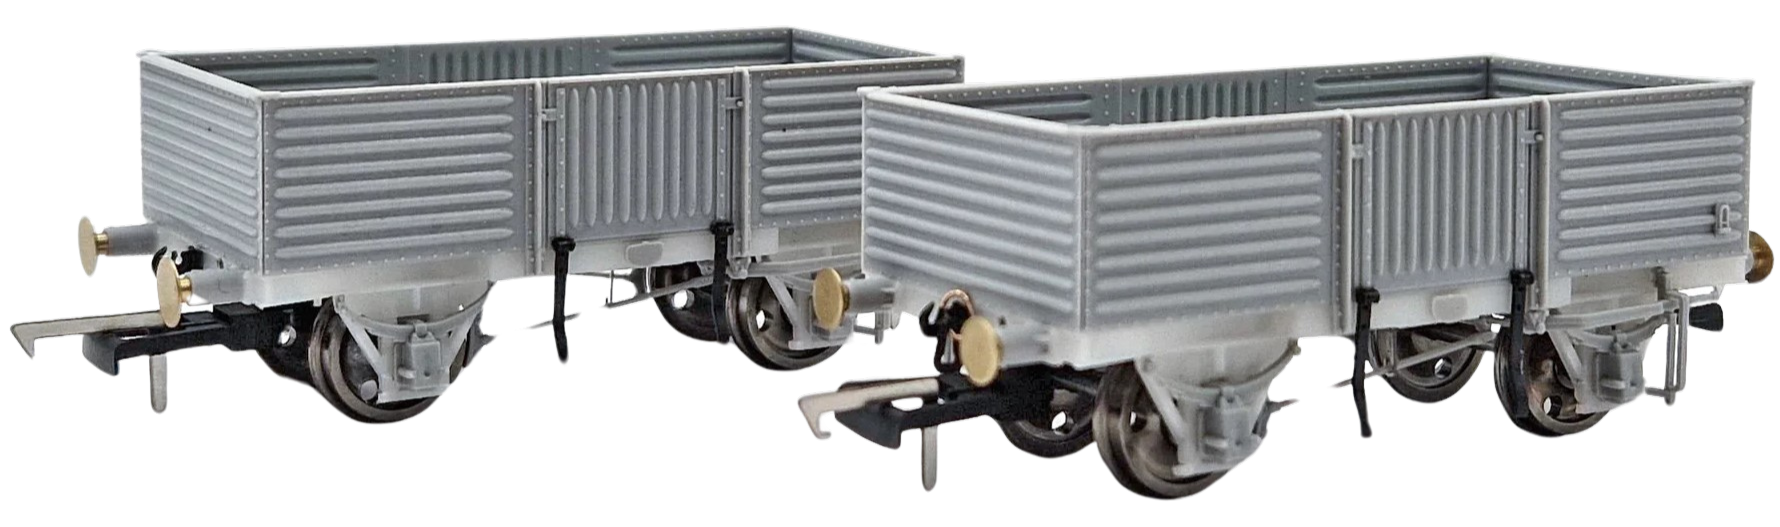 Irish Railway Models OO Gauge (1:76 Scale) 12 ton corrugated open